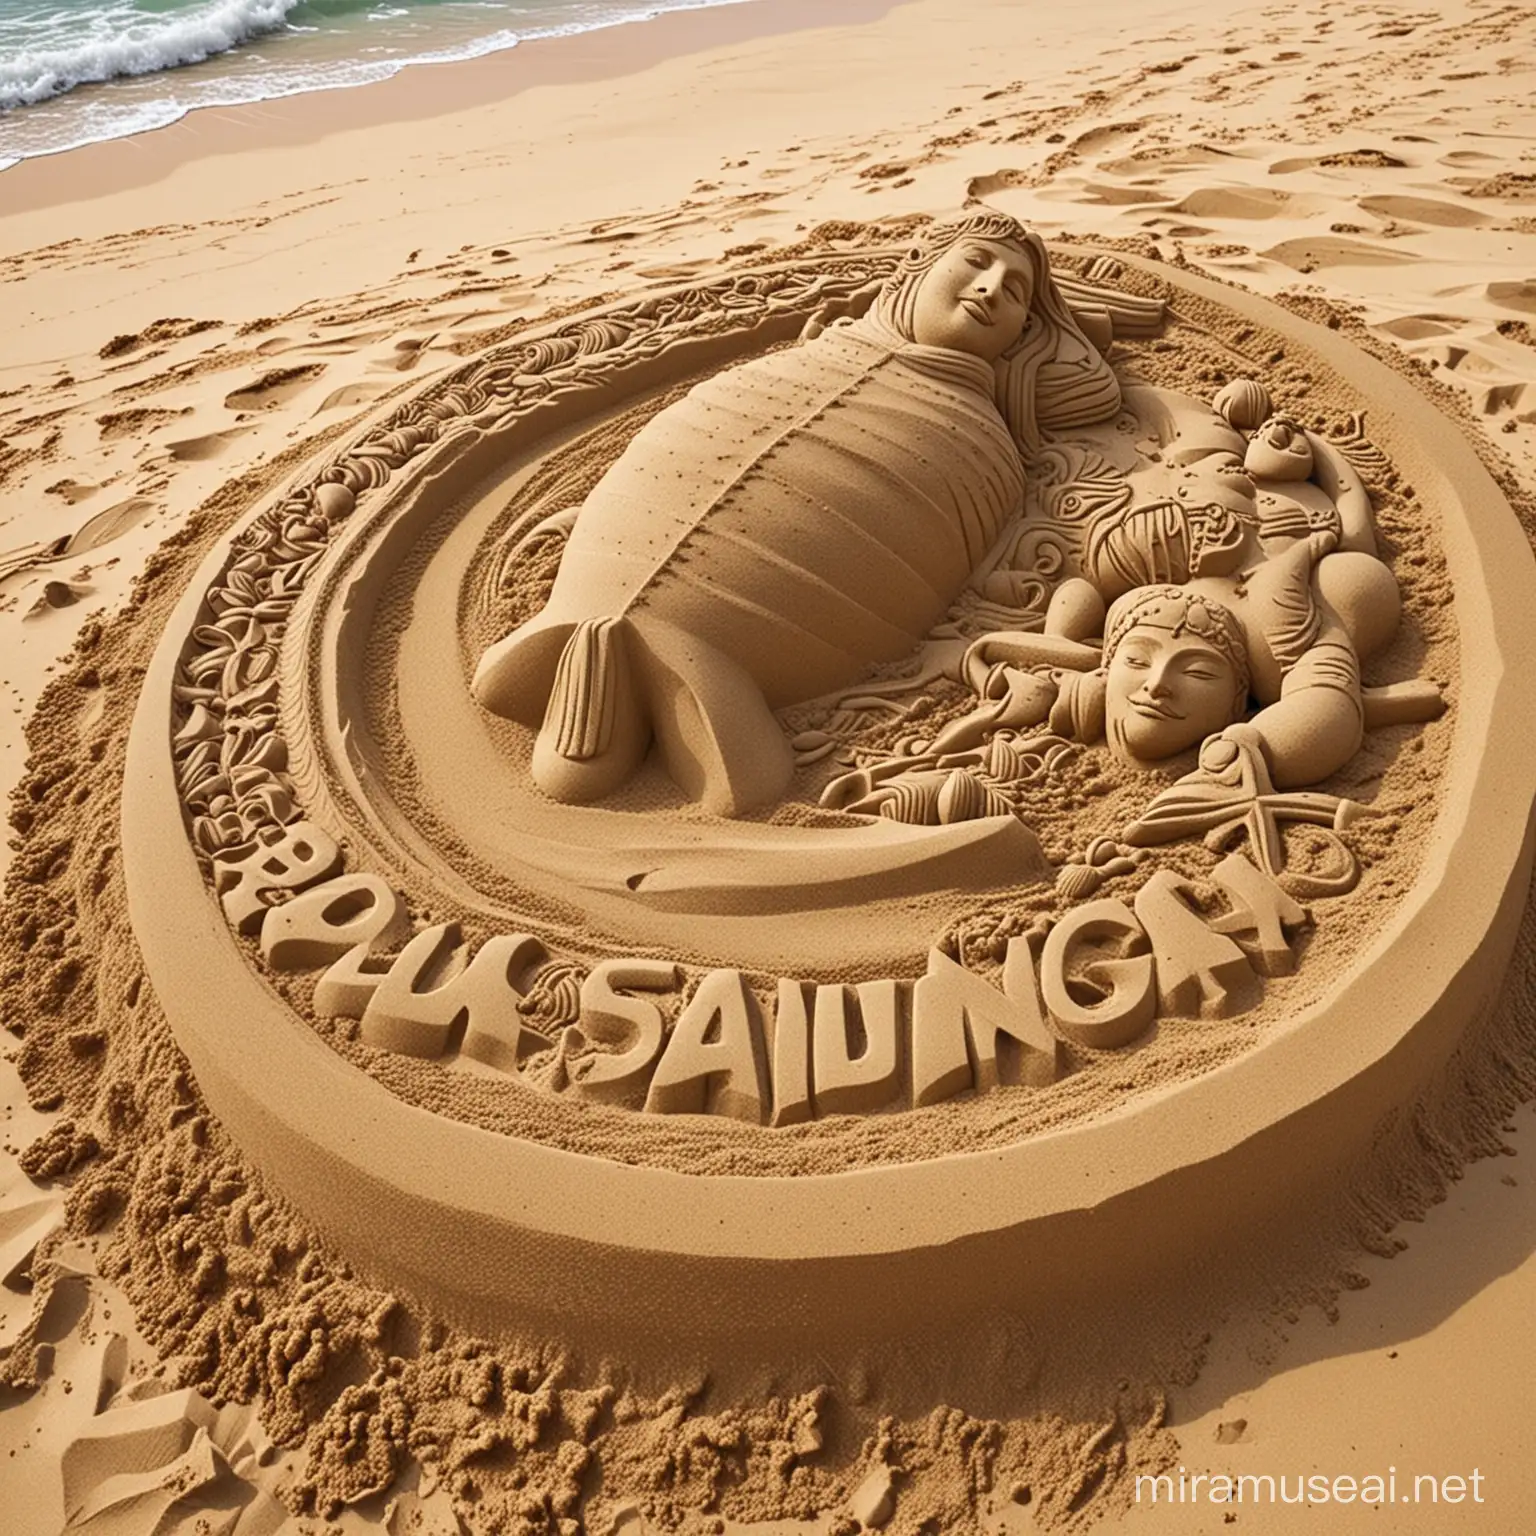 create a beautiful 3D Sand sculpture,beach background,Ultra HD photography quality